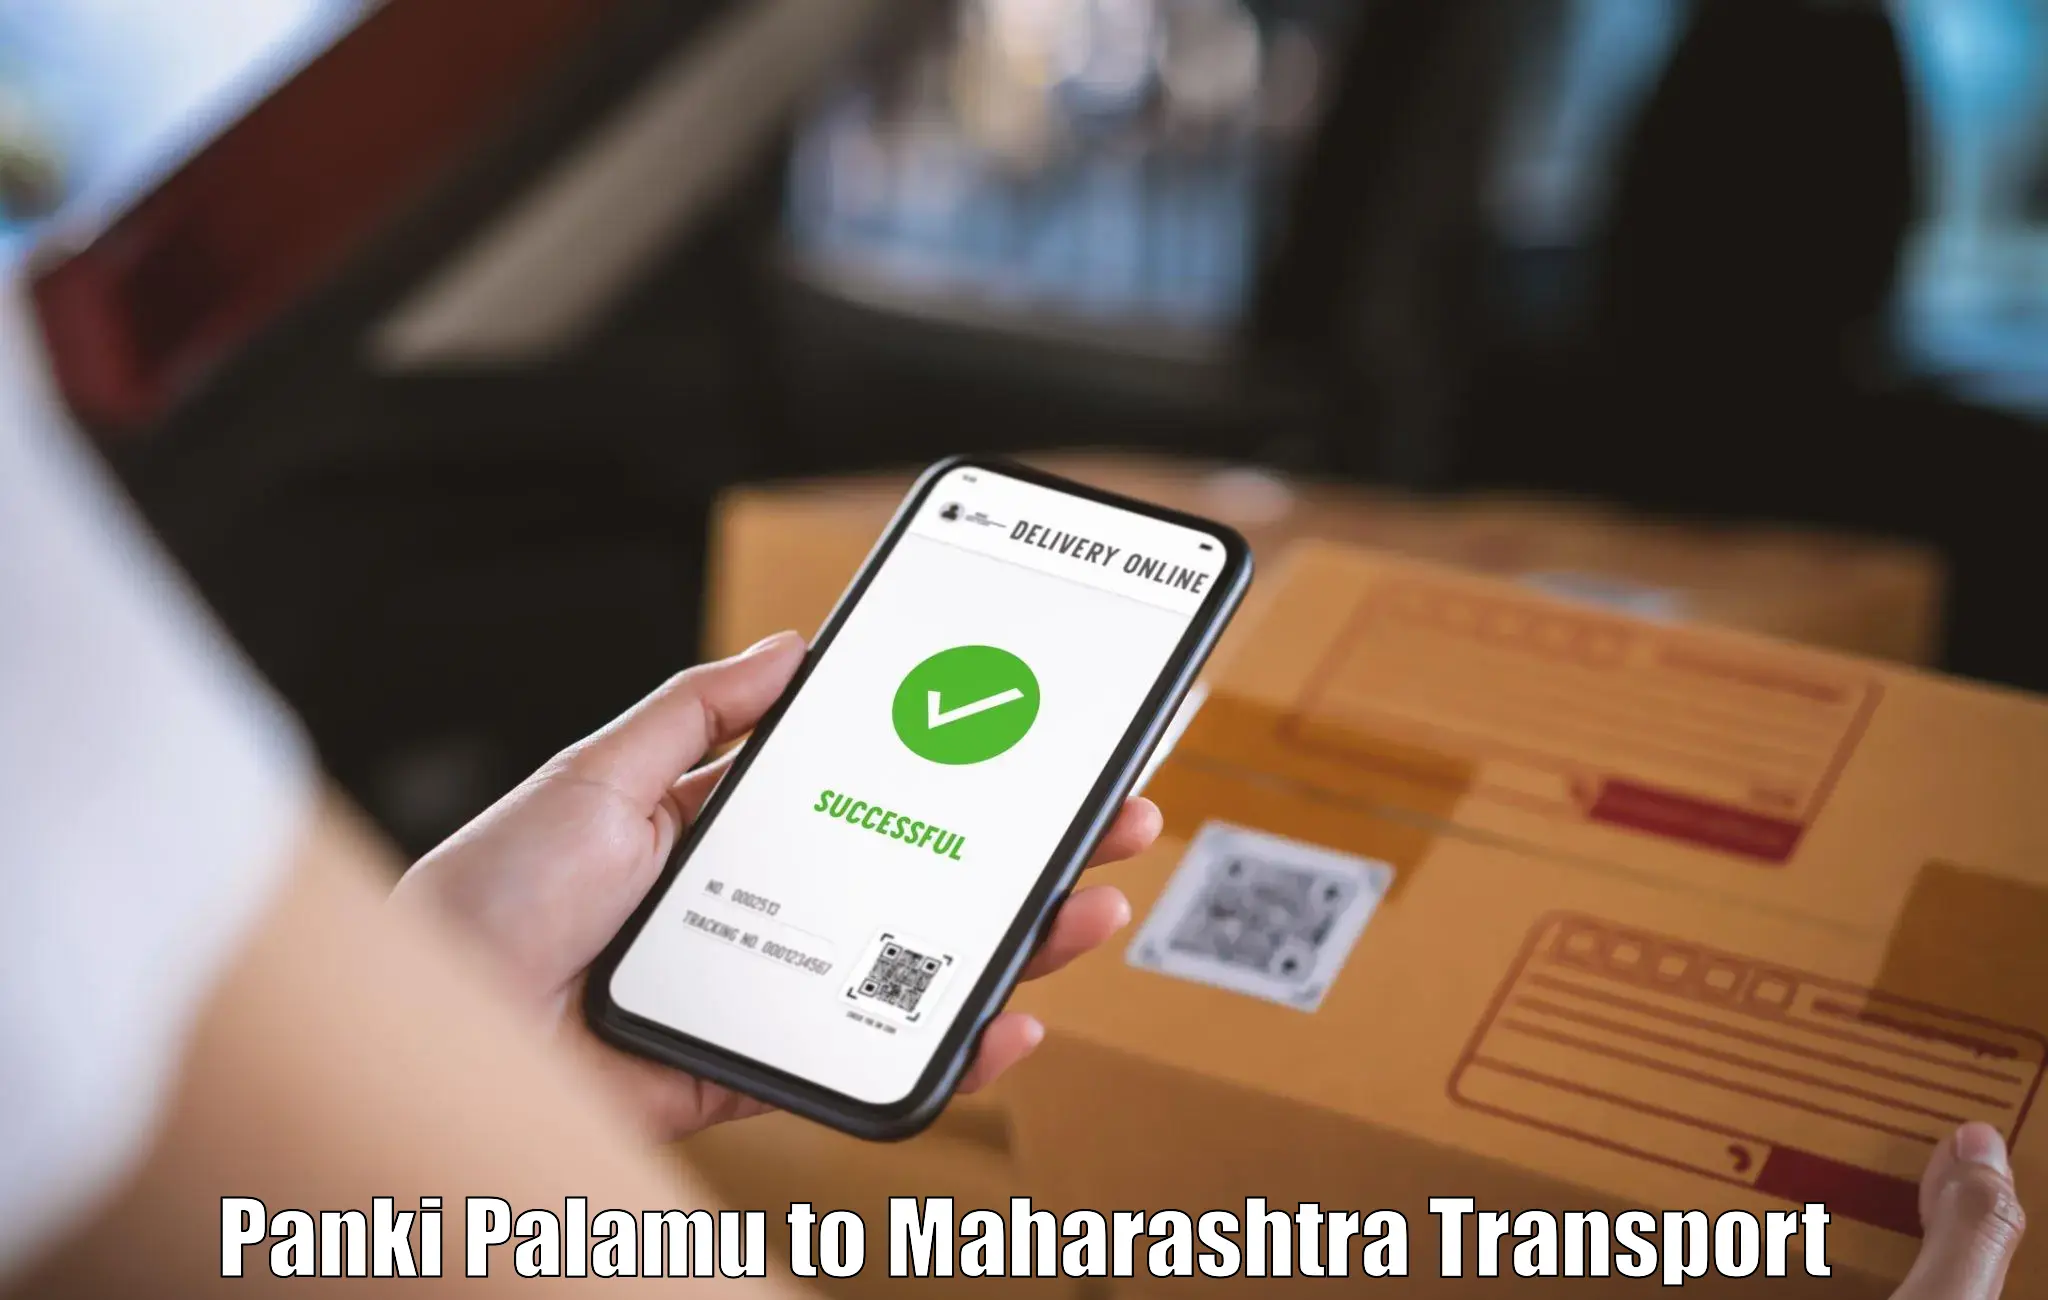 Road transport services in Panki Palamu to Maharashtra